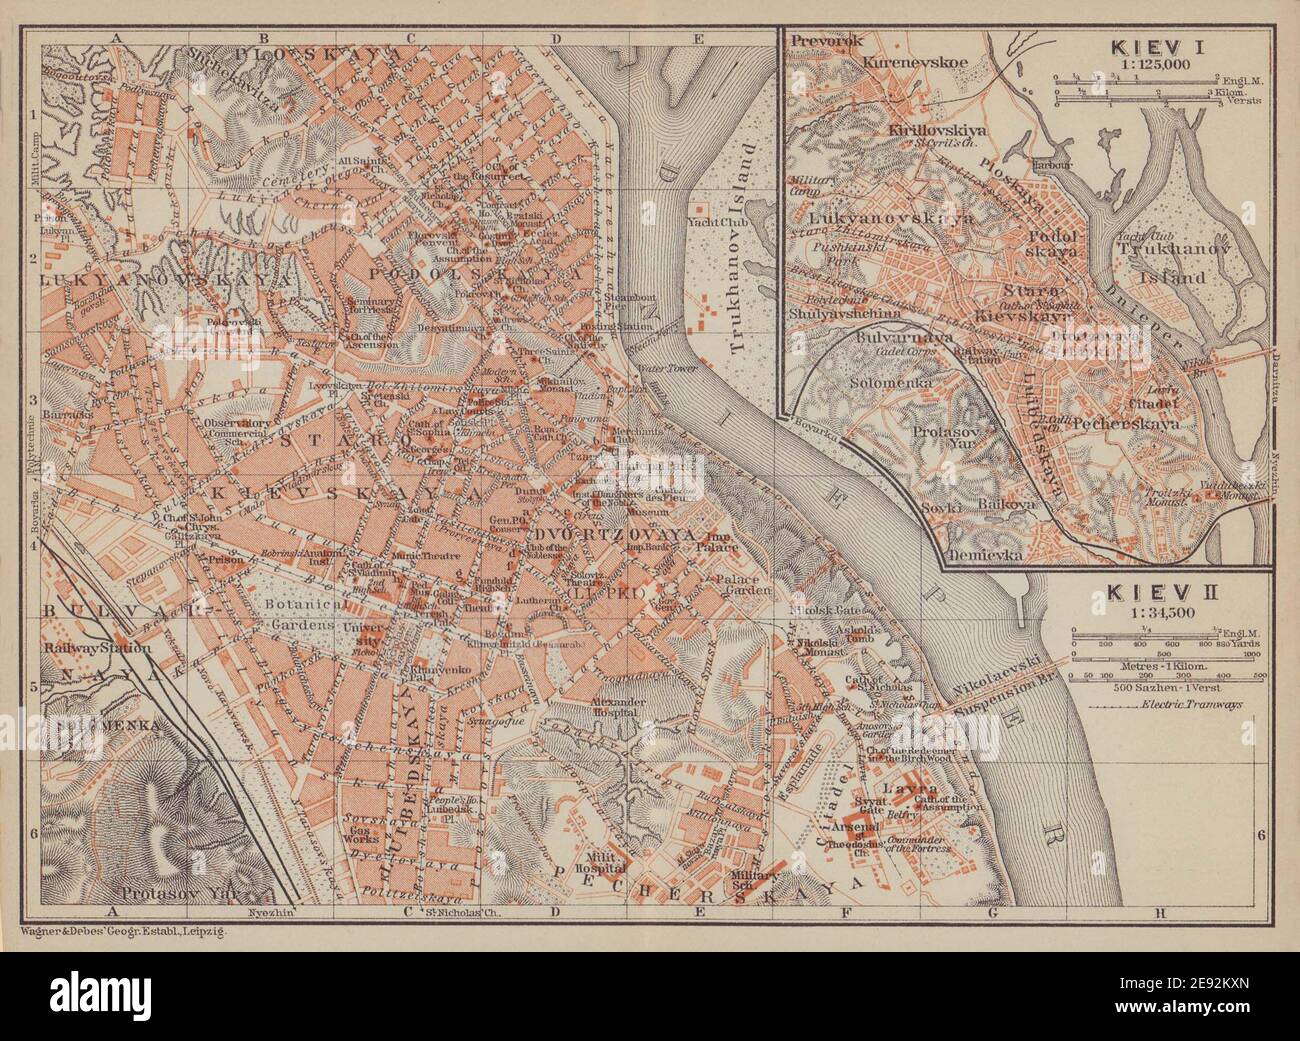 Kiev town/city plan. Ukraine. Kiew. BAEDEKER 1914 old antique map chart Stock Photo